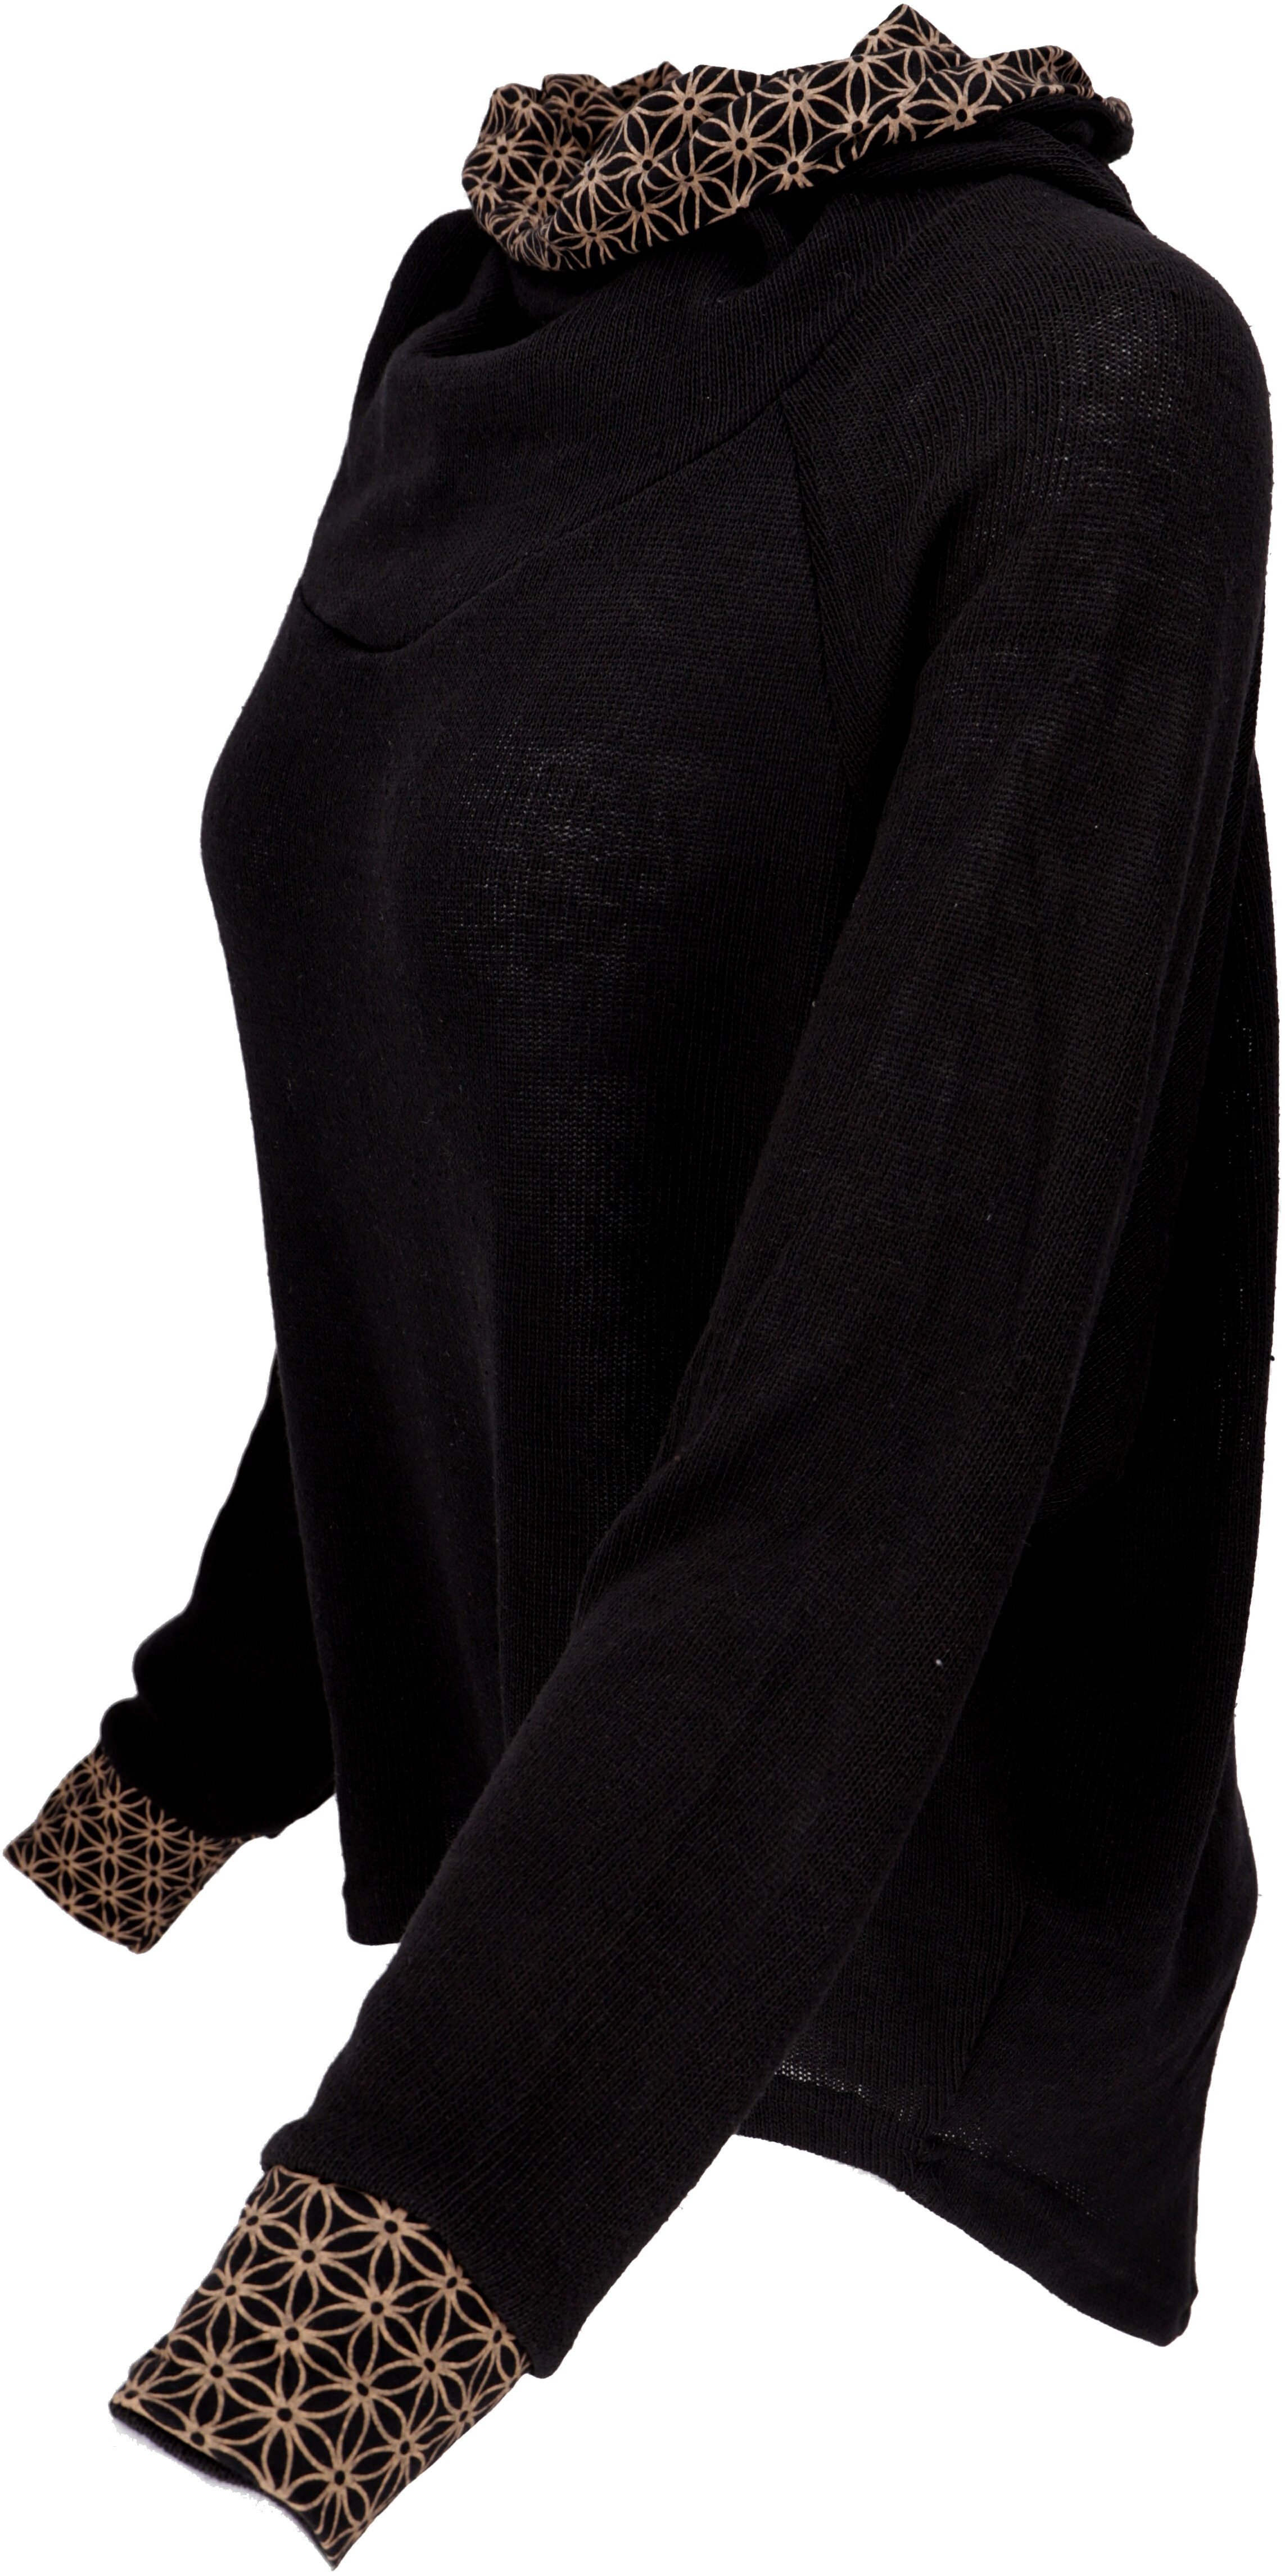 Longsleeve -.. Kapuzenpullover alternative Pullover, Sweatshirt, schwarz Bekleidung Guru-Shop Hoody,